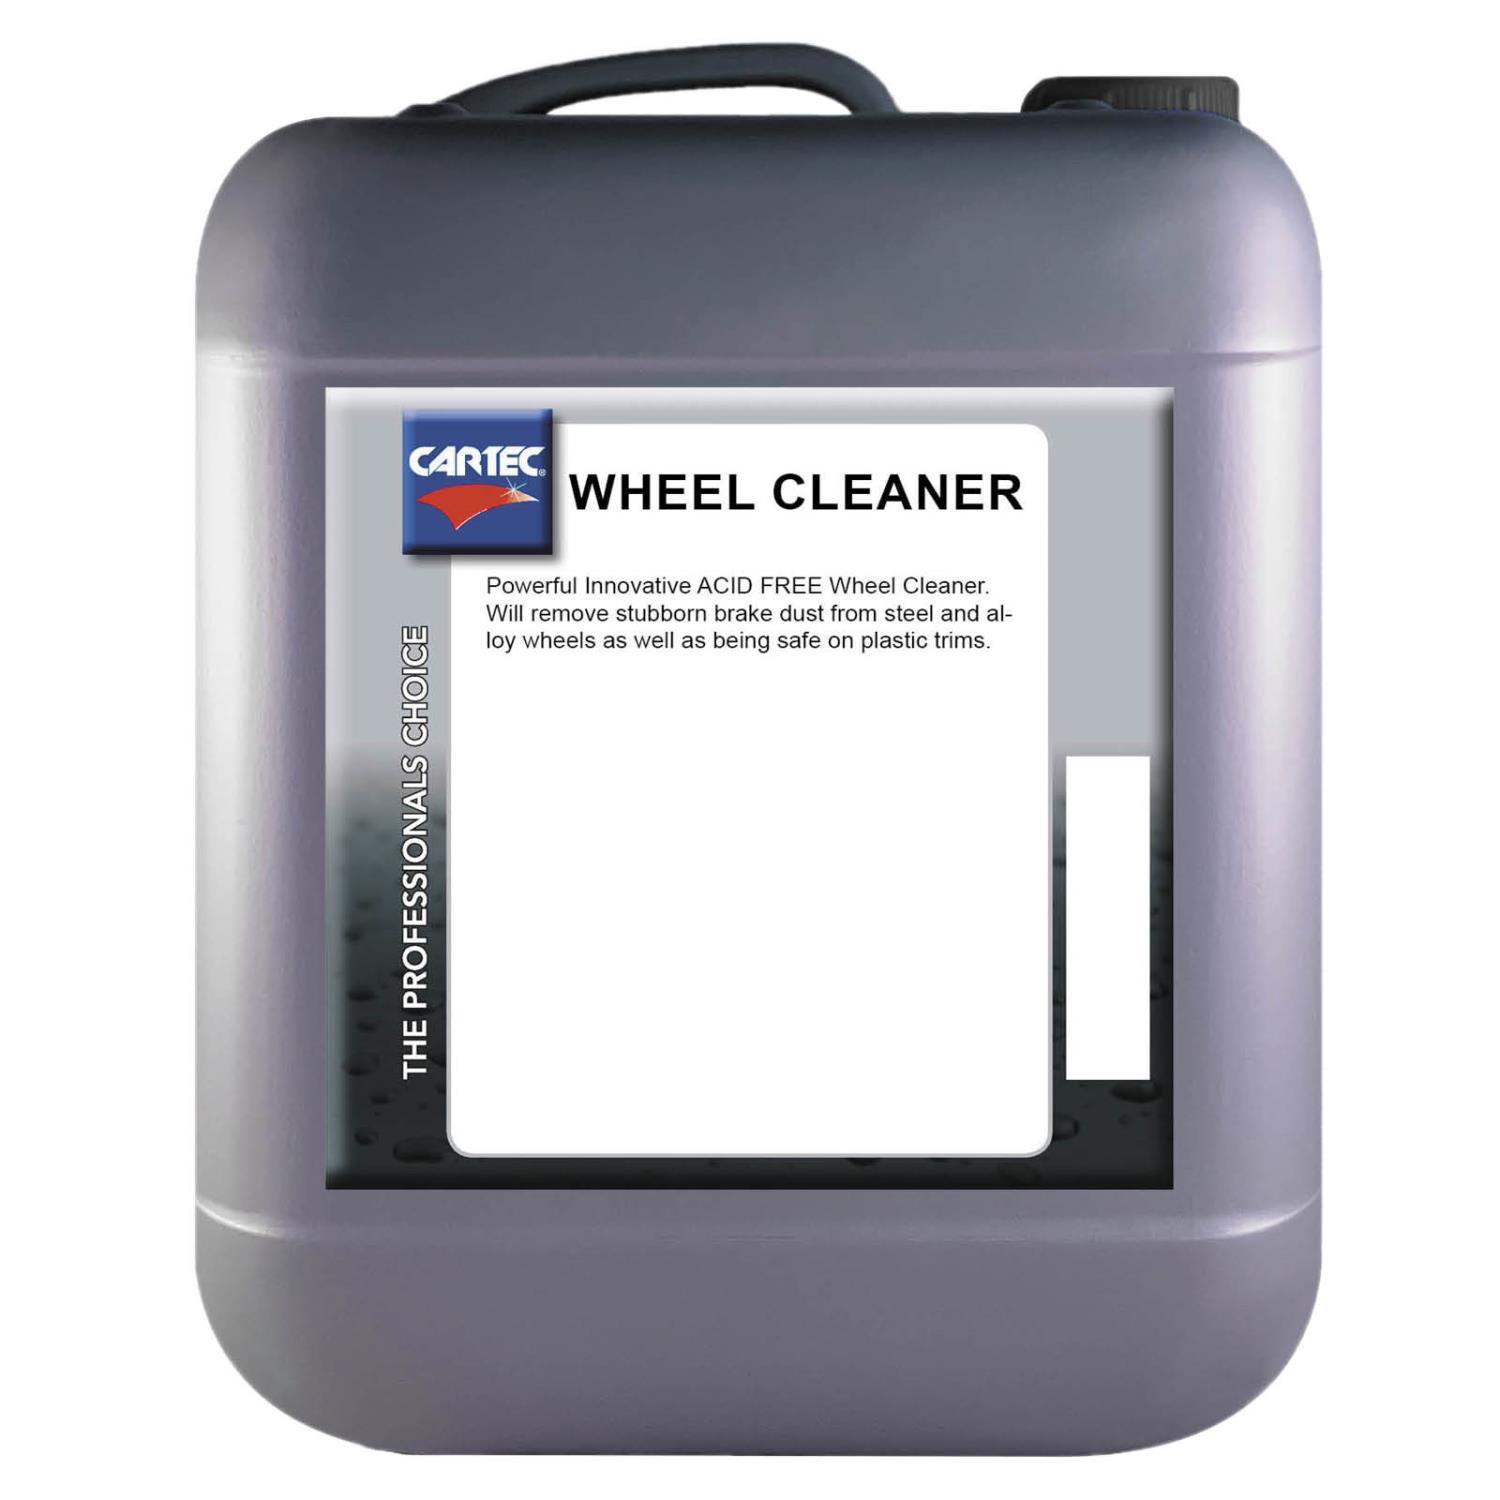 Cartec Wheel Cleaner Acid Free - 10 Ltr.